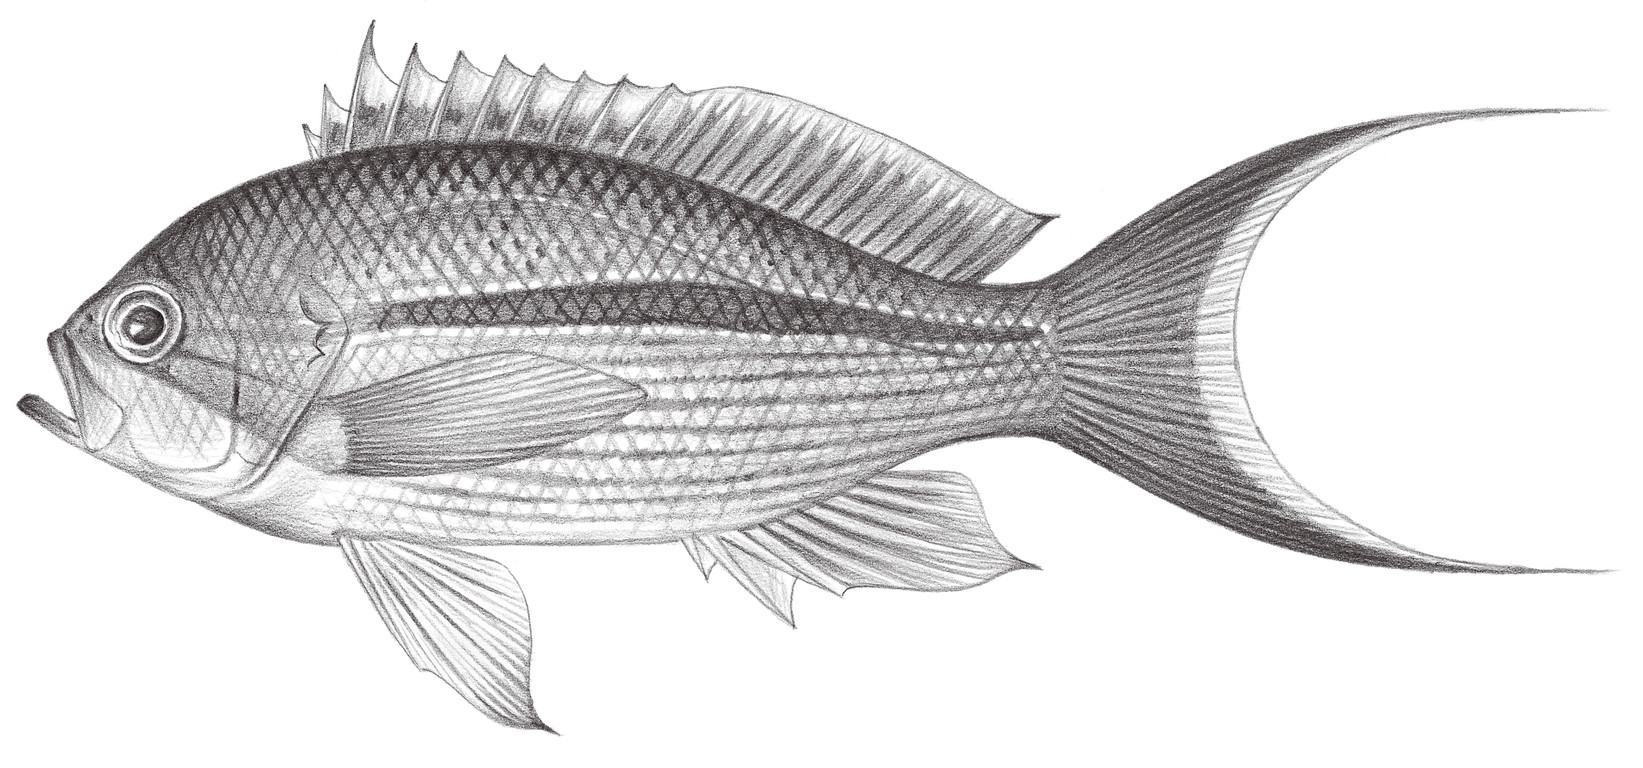 1084.	條紋擬花鮨 Pseudanthias fasciatus (Kamohara, 1954)